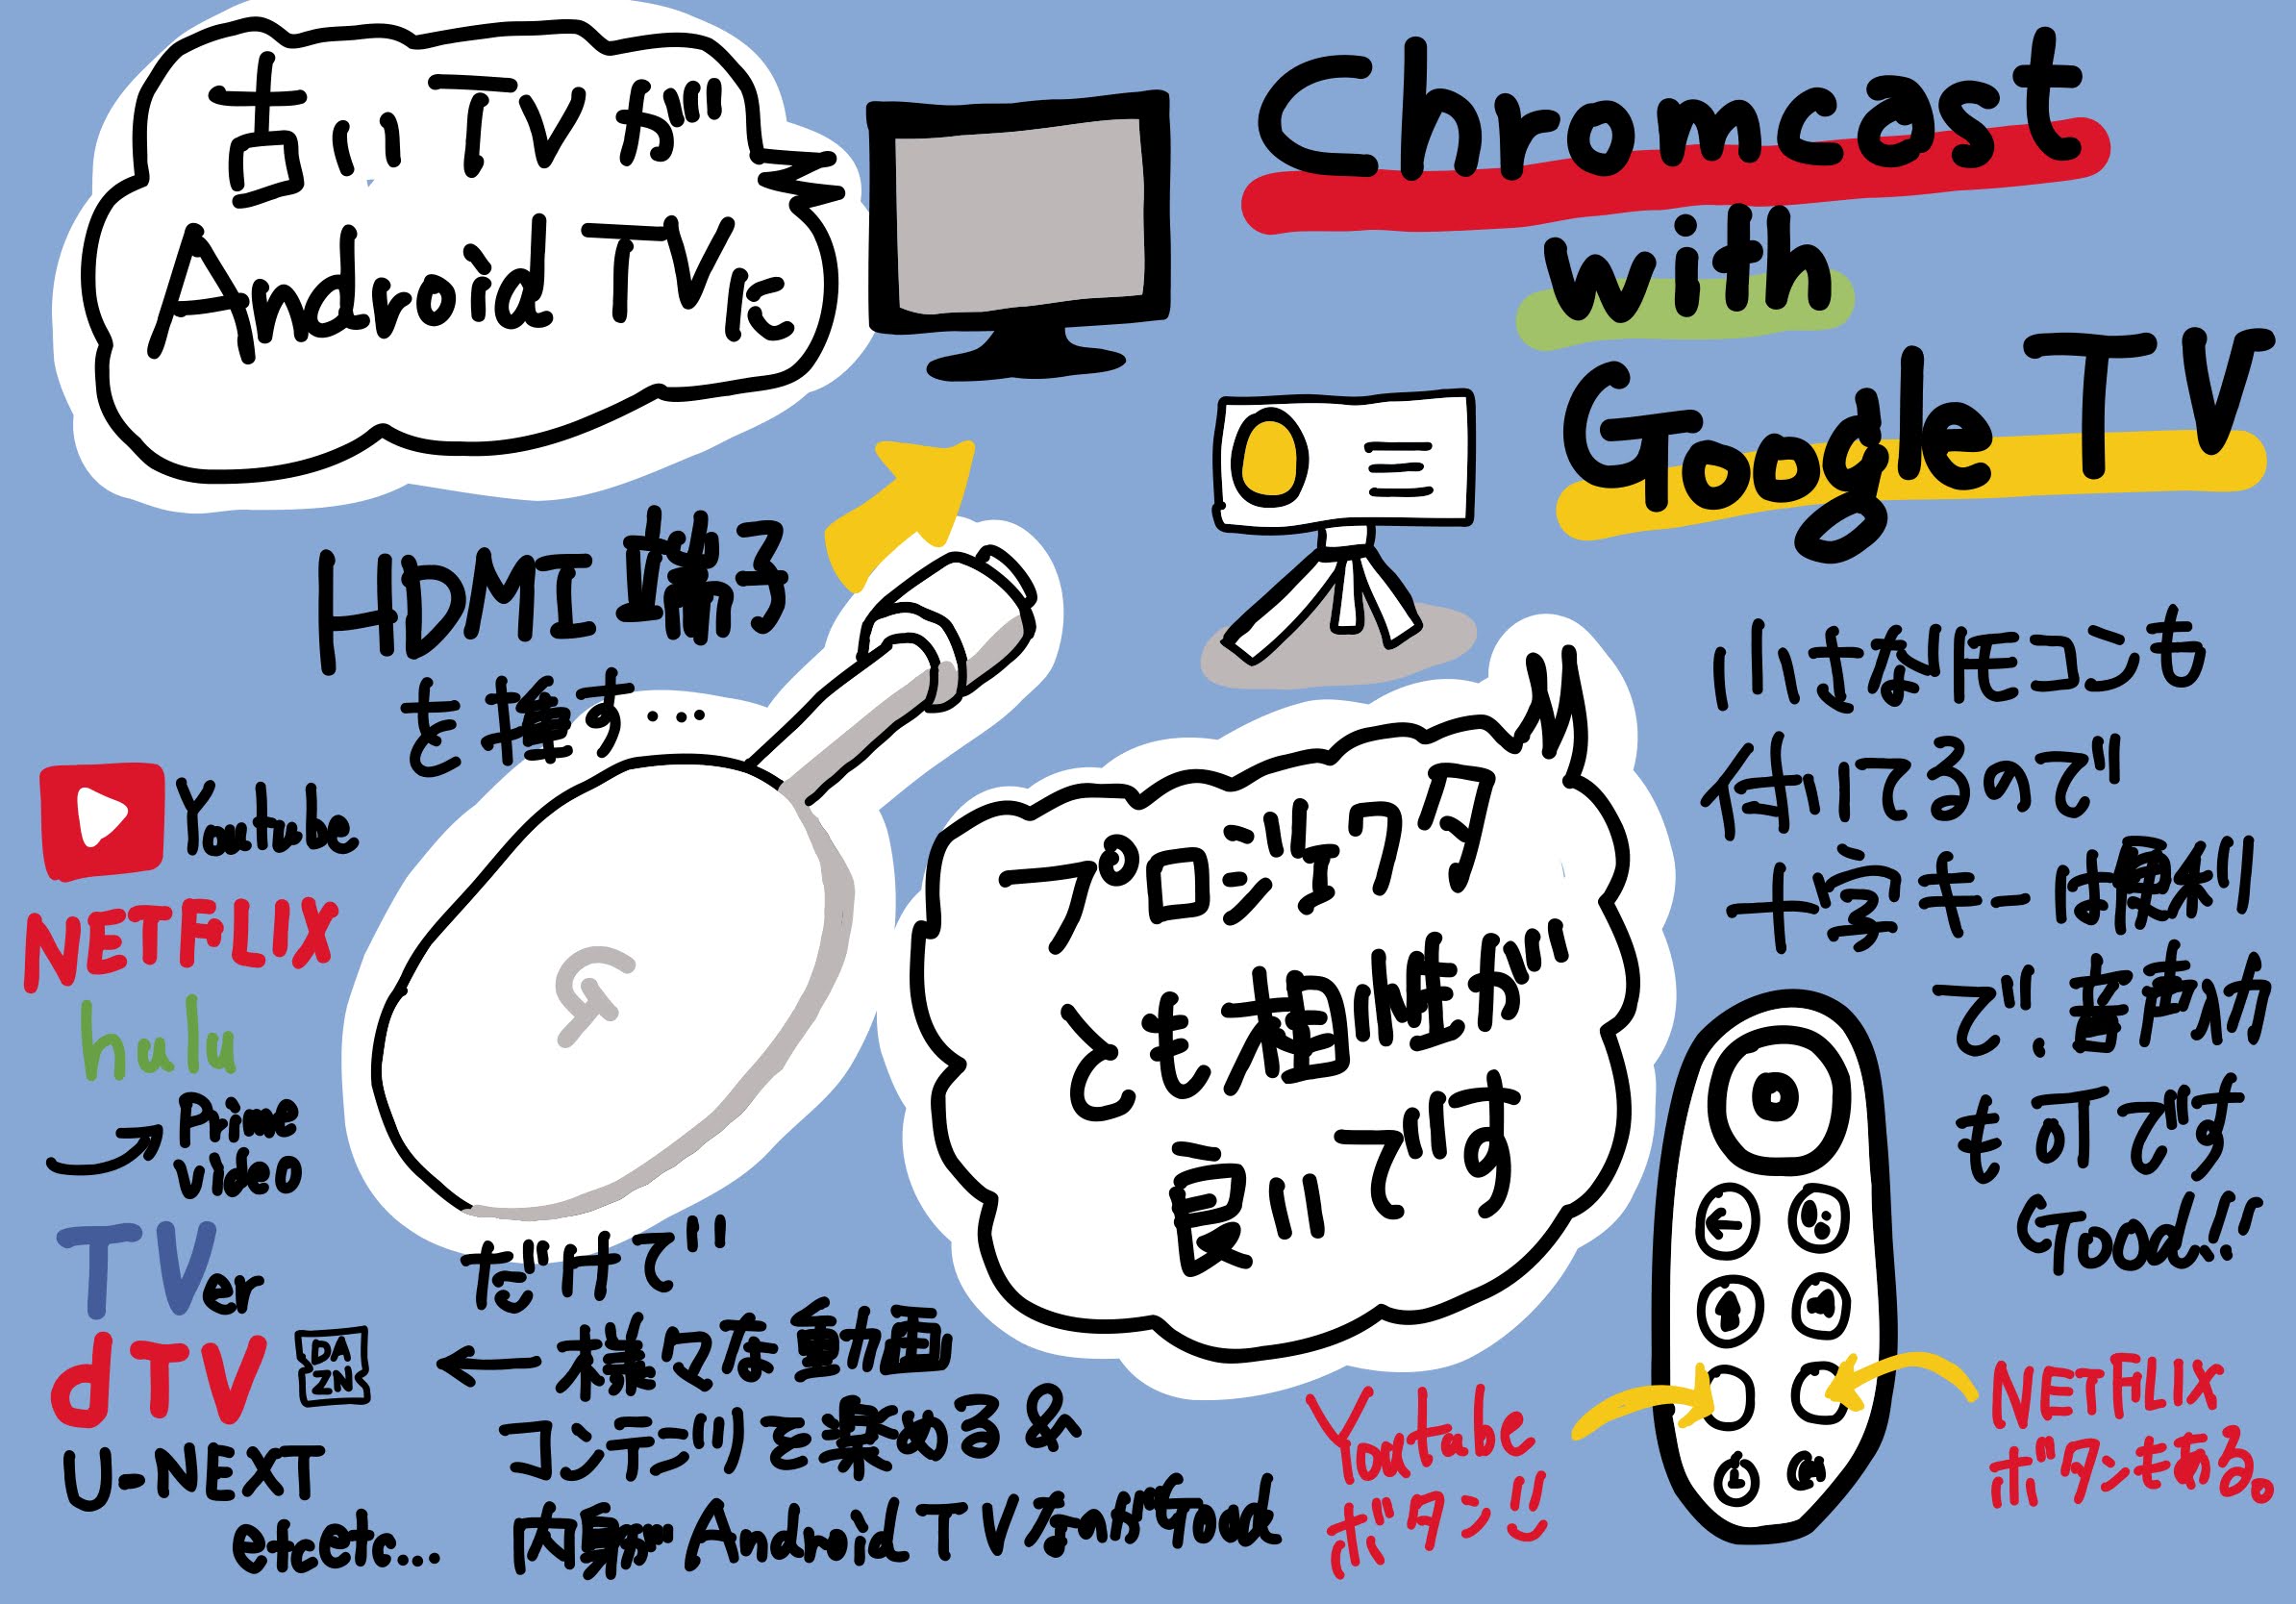 Chromecast with Google TV NETFLIX パックを購入してプロジェクタにつないでみた